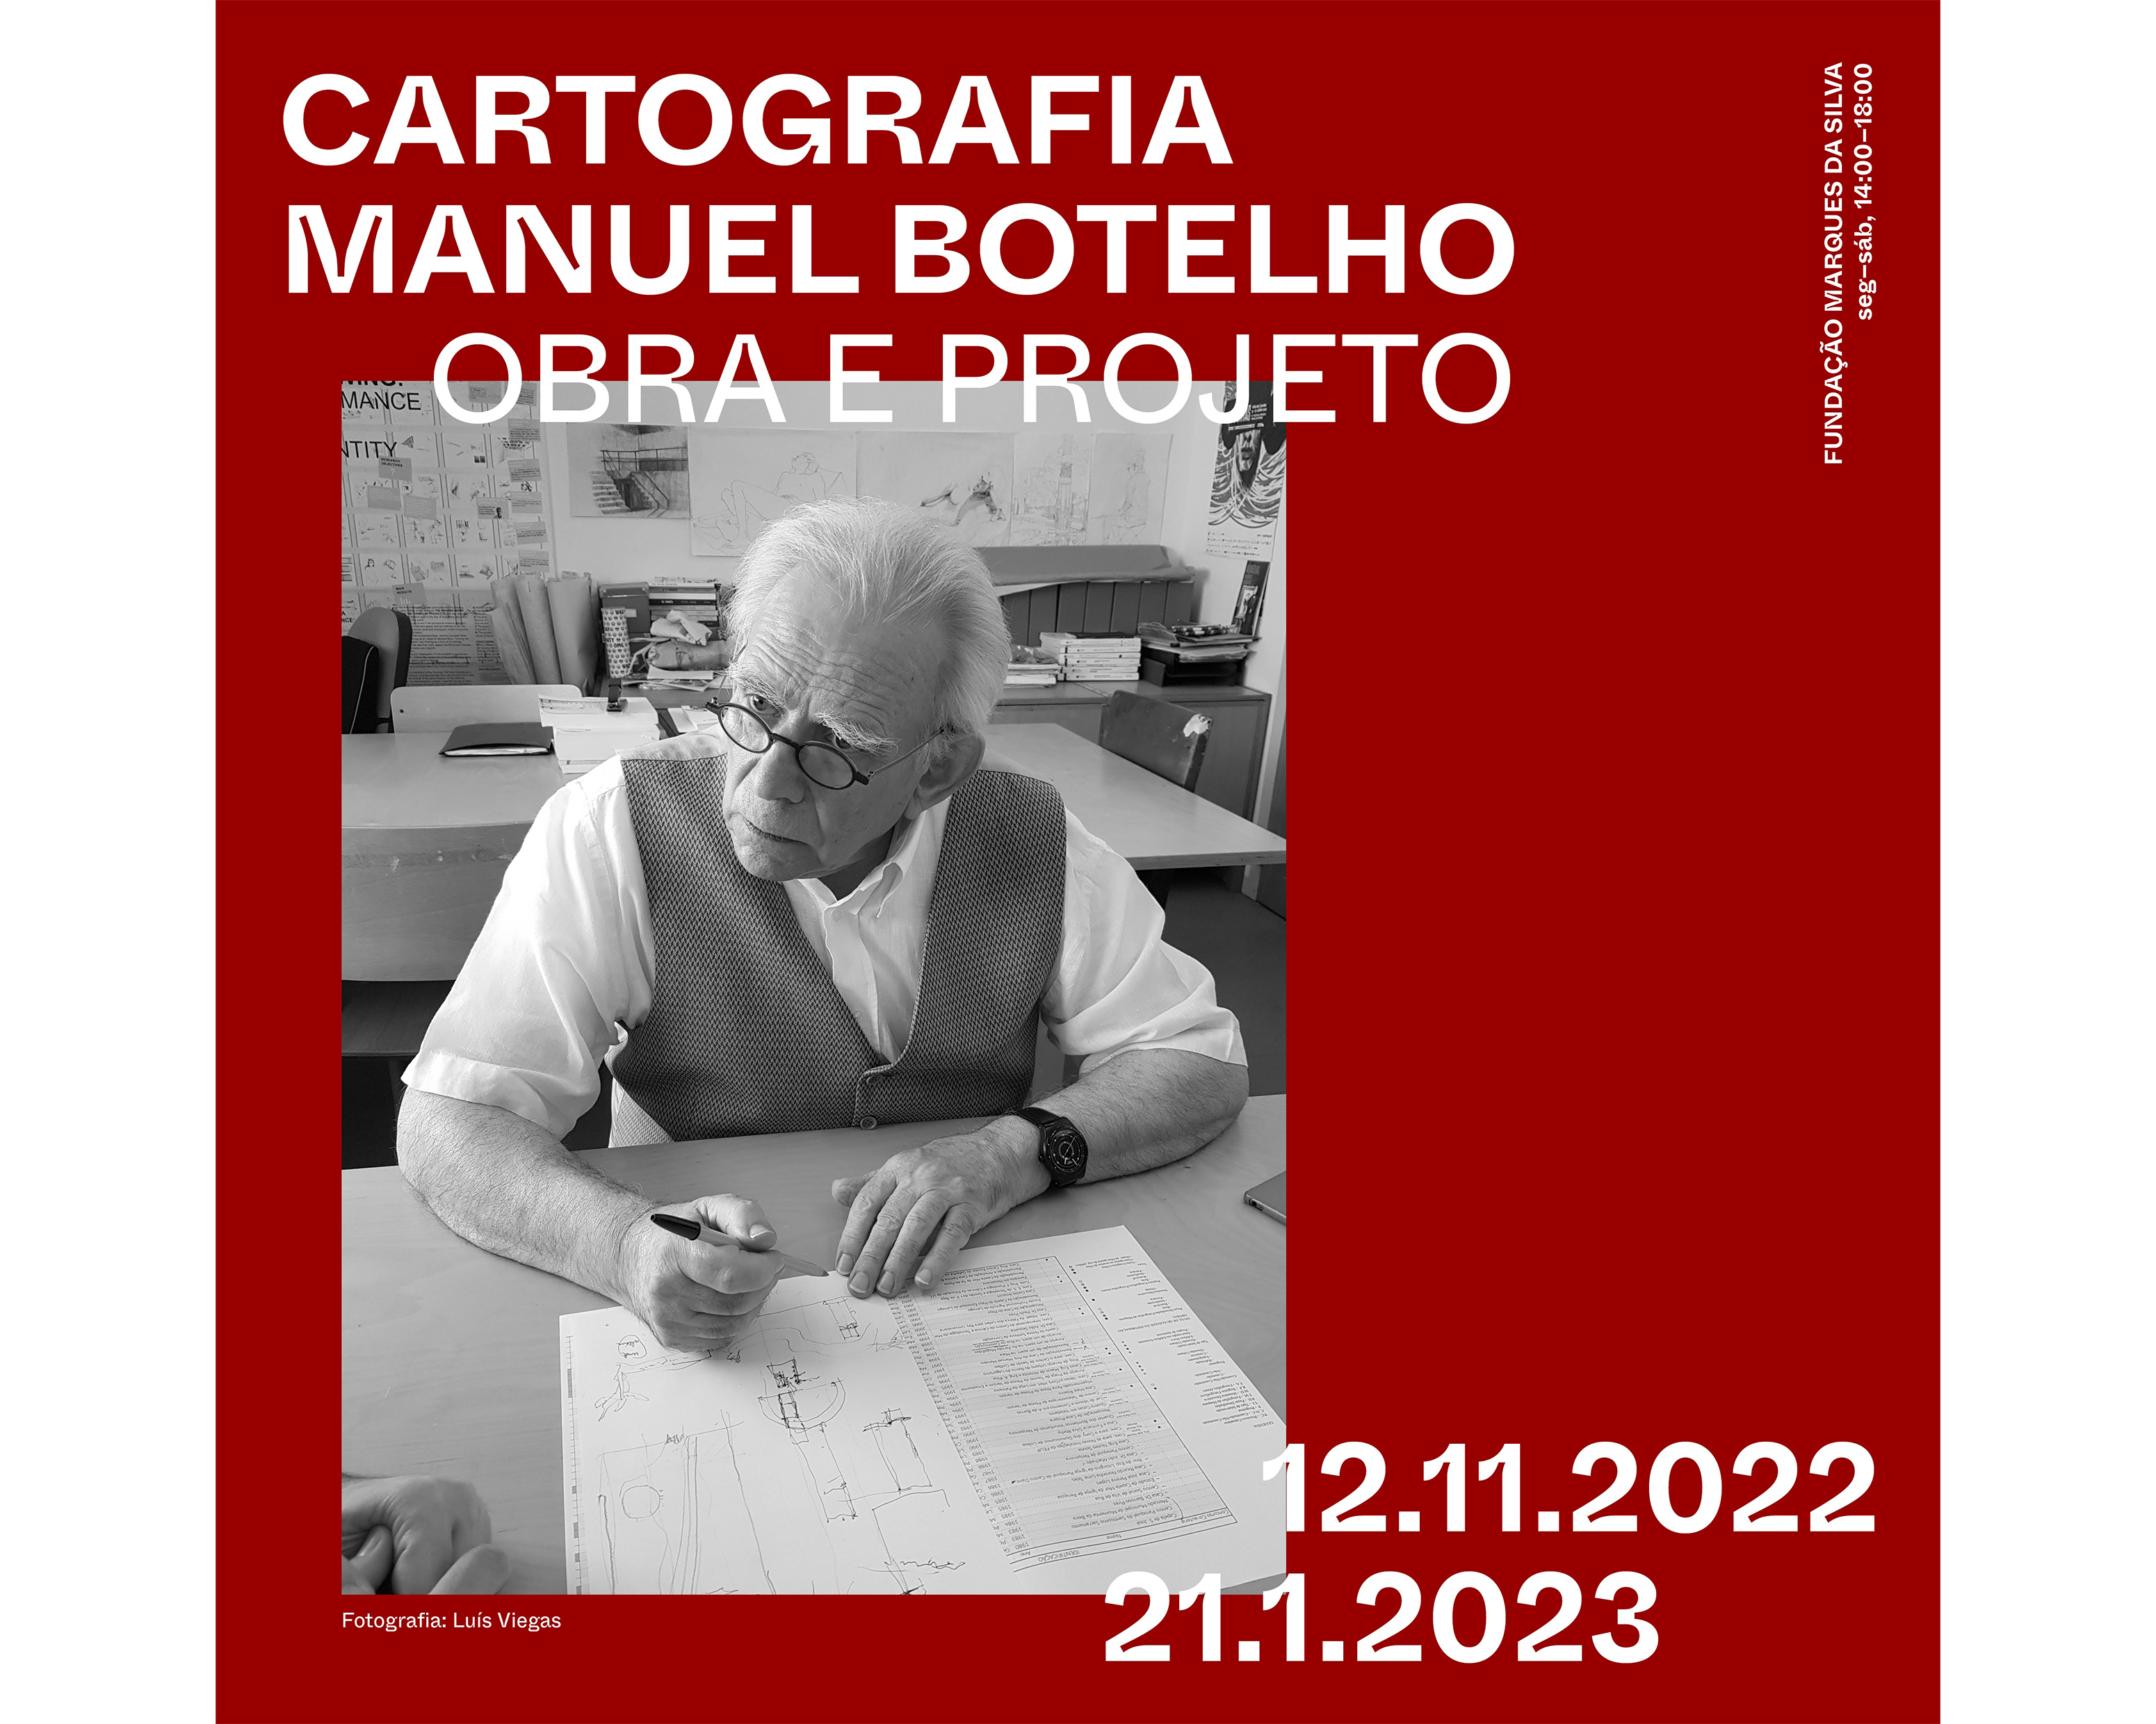 Exhibition ‘Cartografia Manuel Botelho, obra e projecto’  image